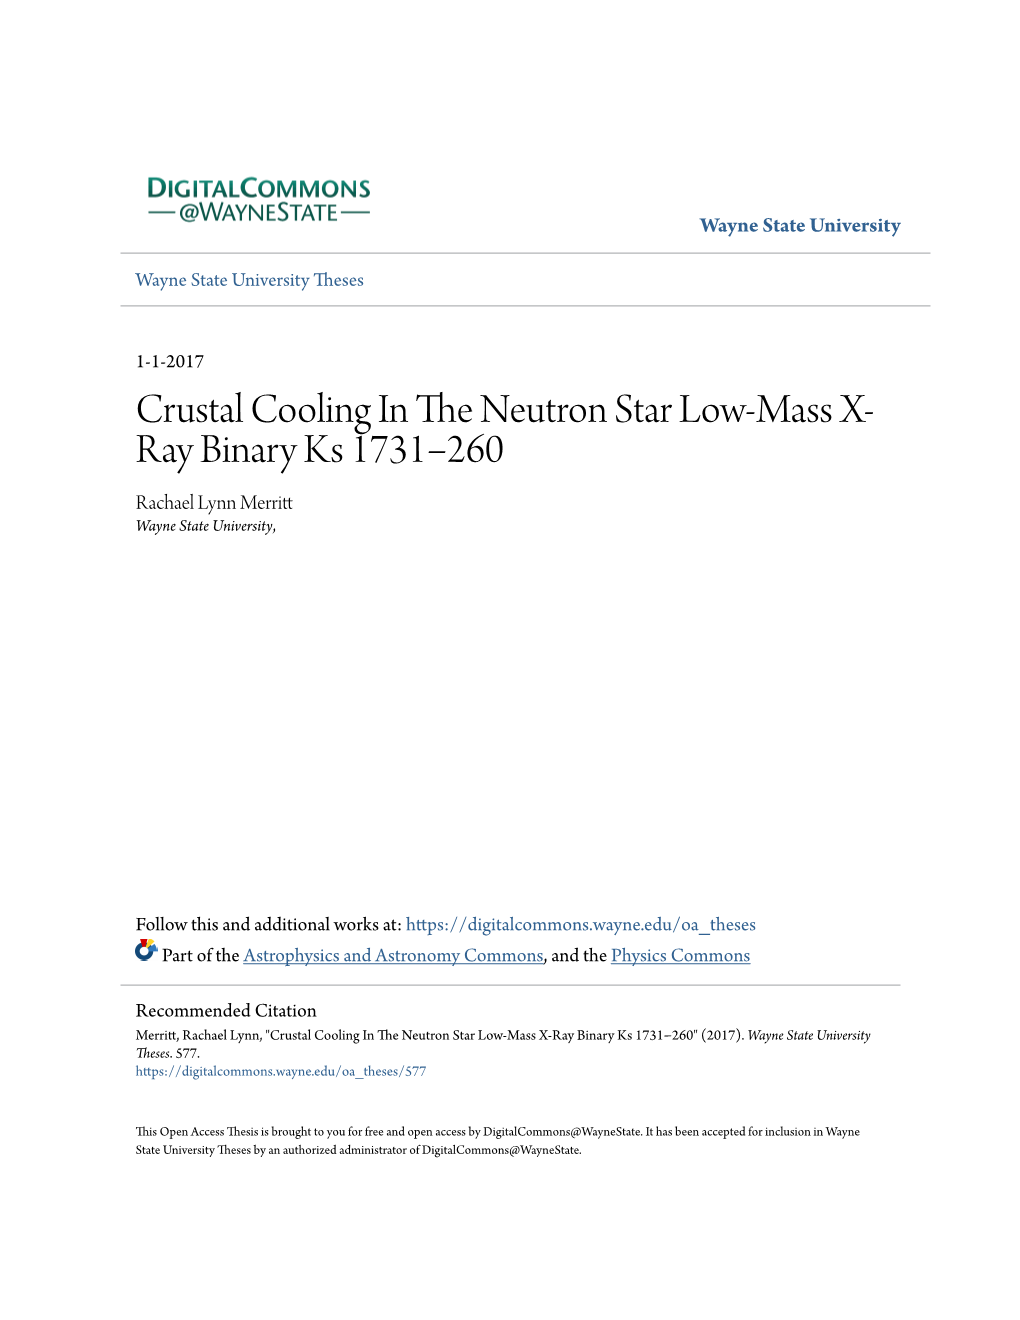 Crustal Cooling in the Neutron Star Low-Mass X-Ray Binary KS 1731−260 by Rachael L